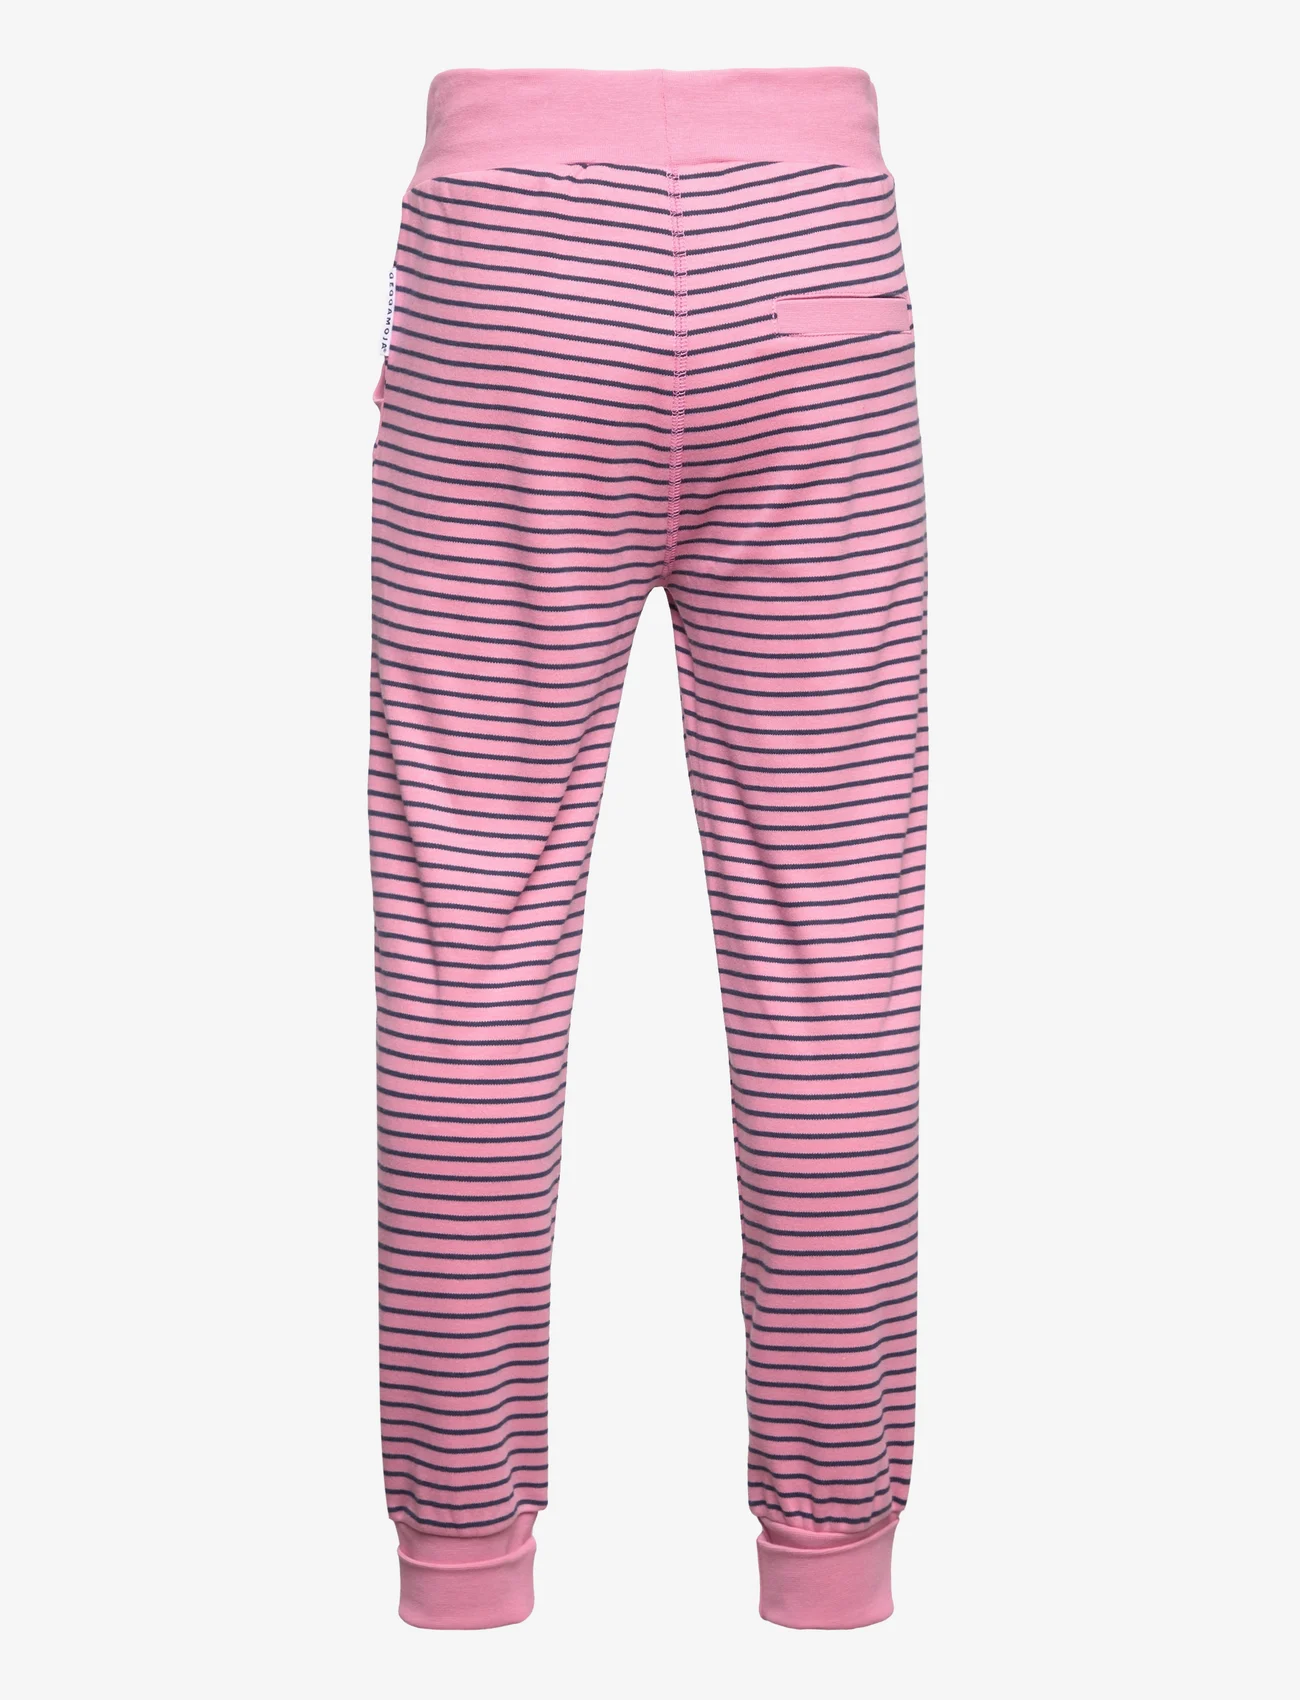 Geggamoja - Long pants - lowest prices - pink/navy - 1